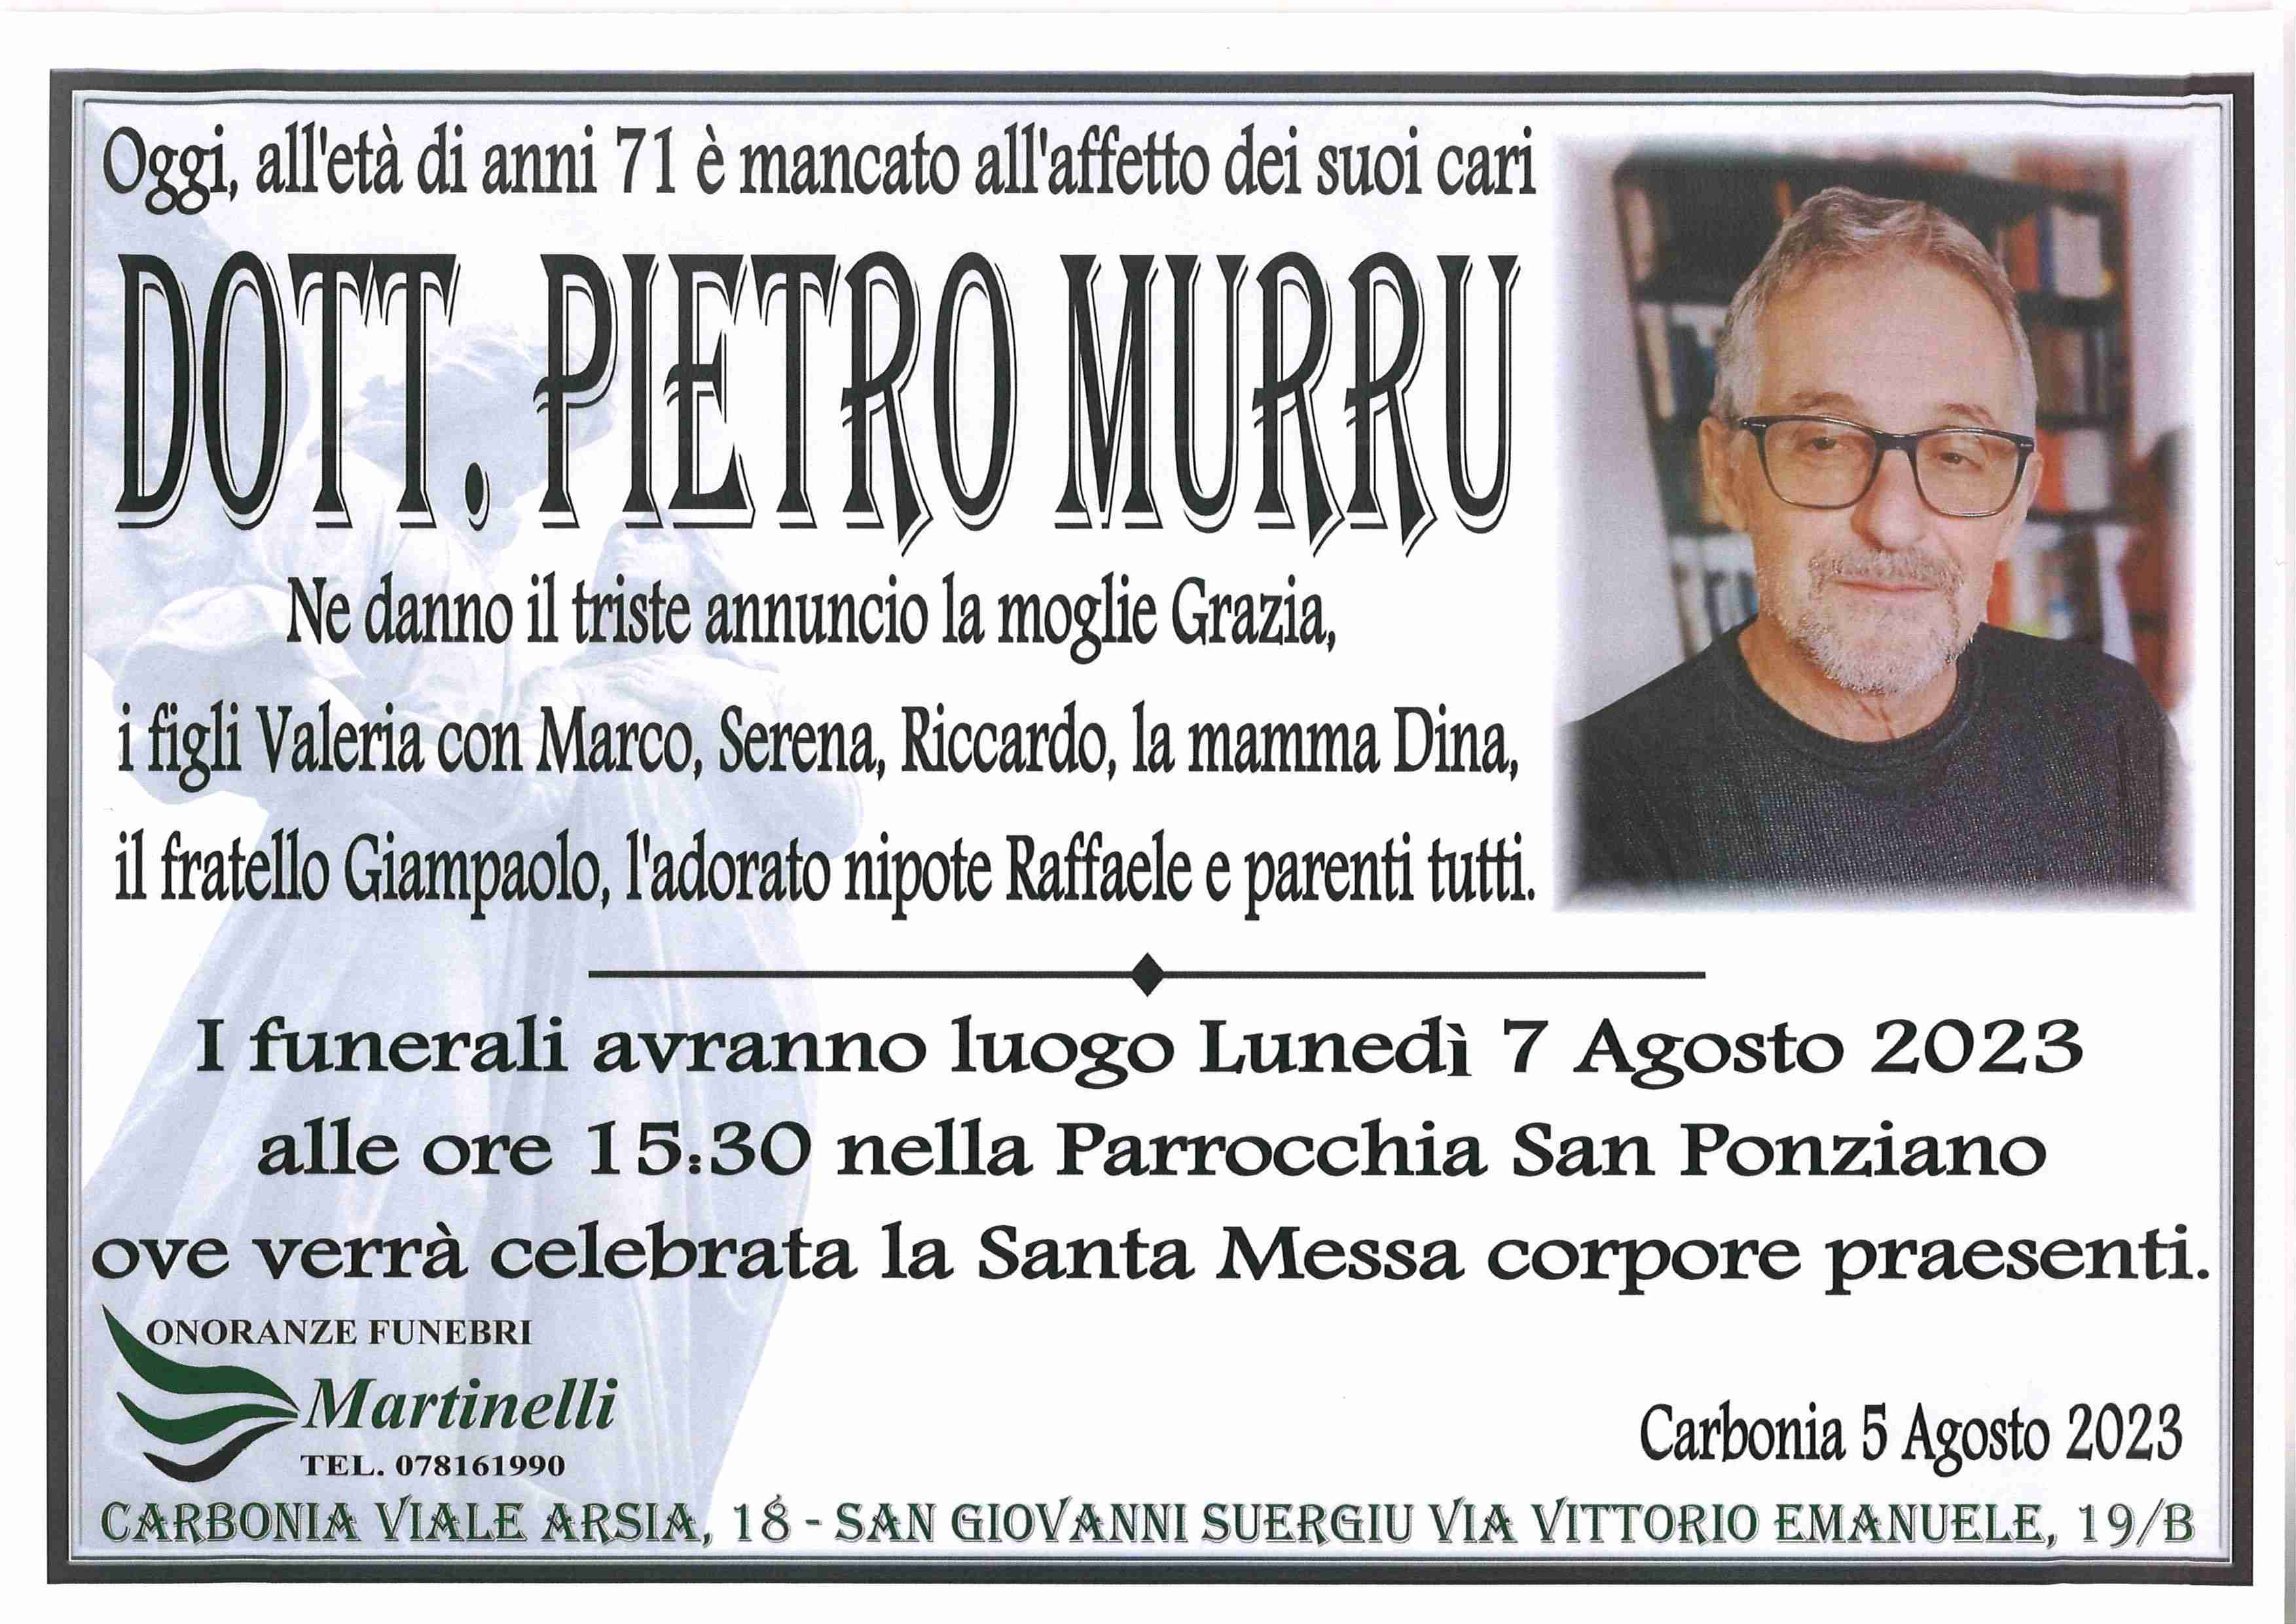 Pietro Murru